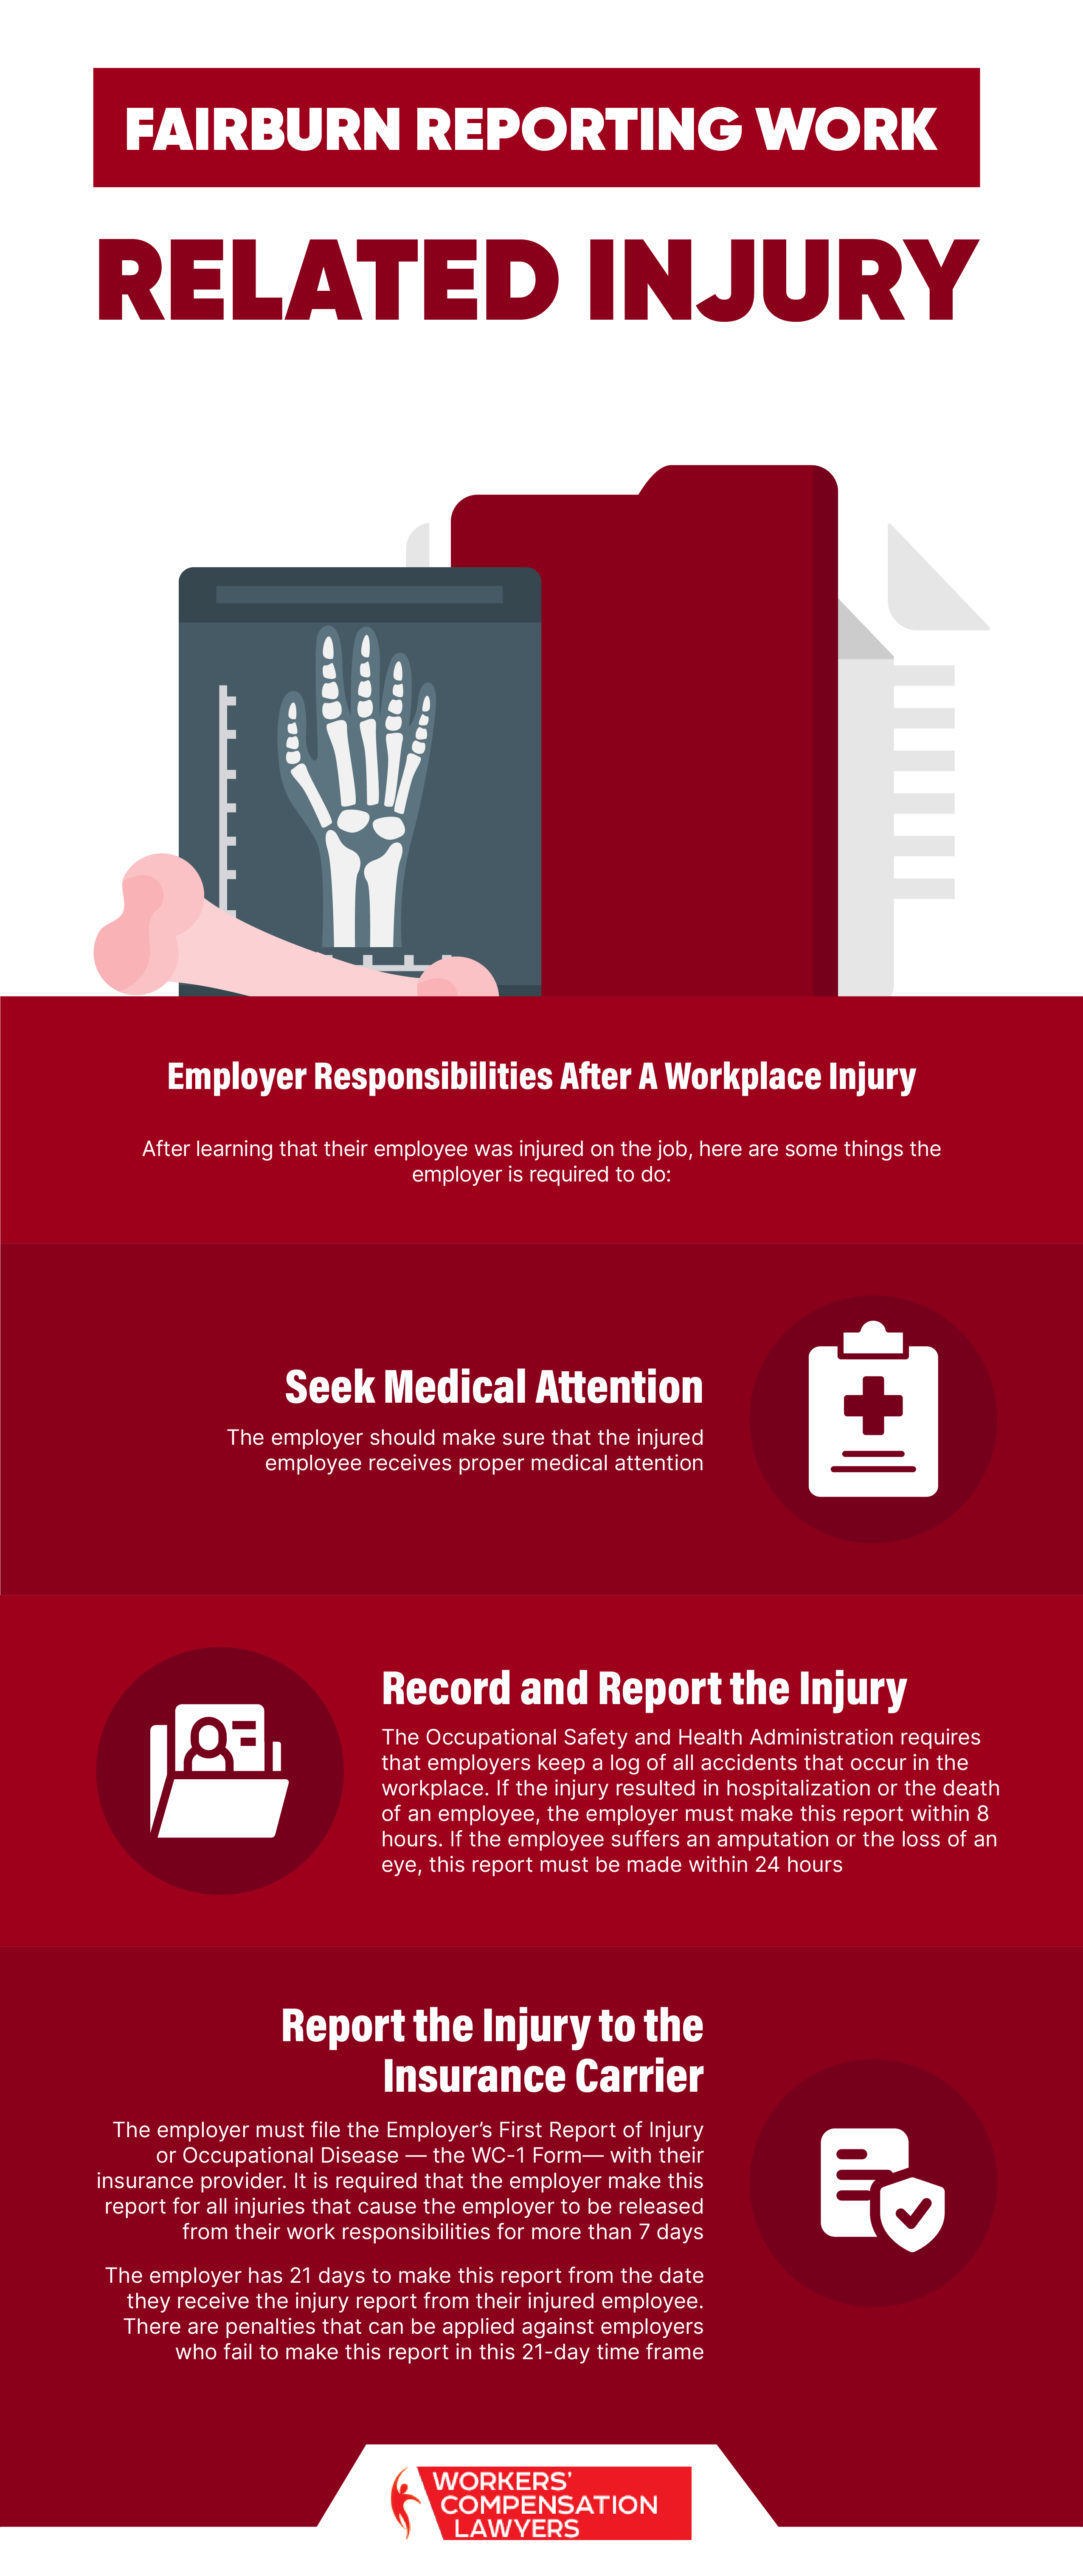 Fairburn Related Work Injury Infographic